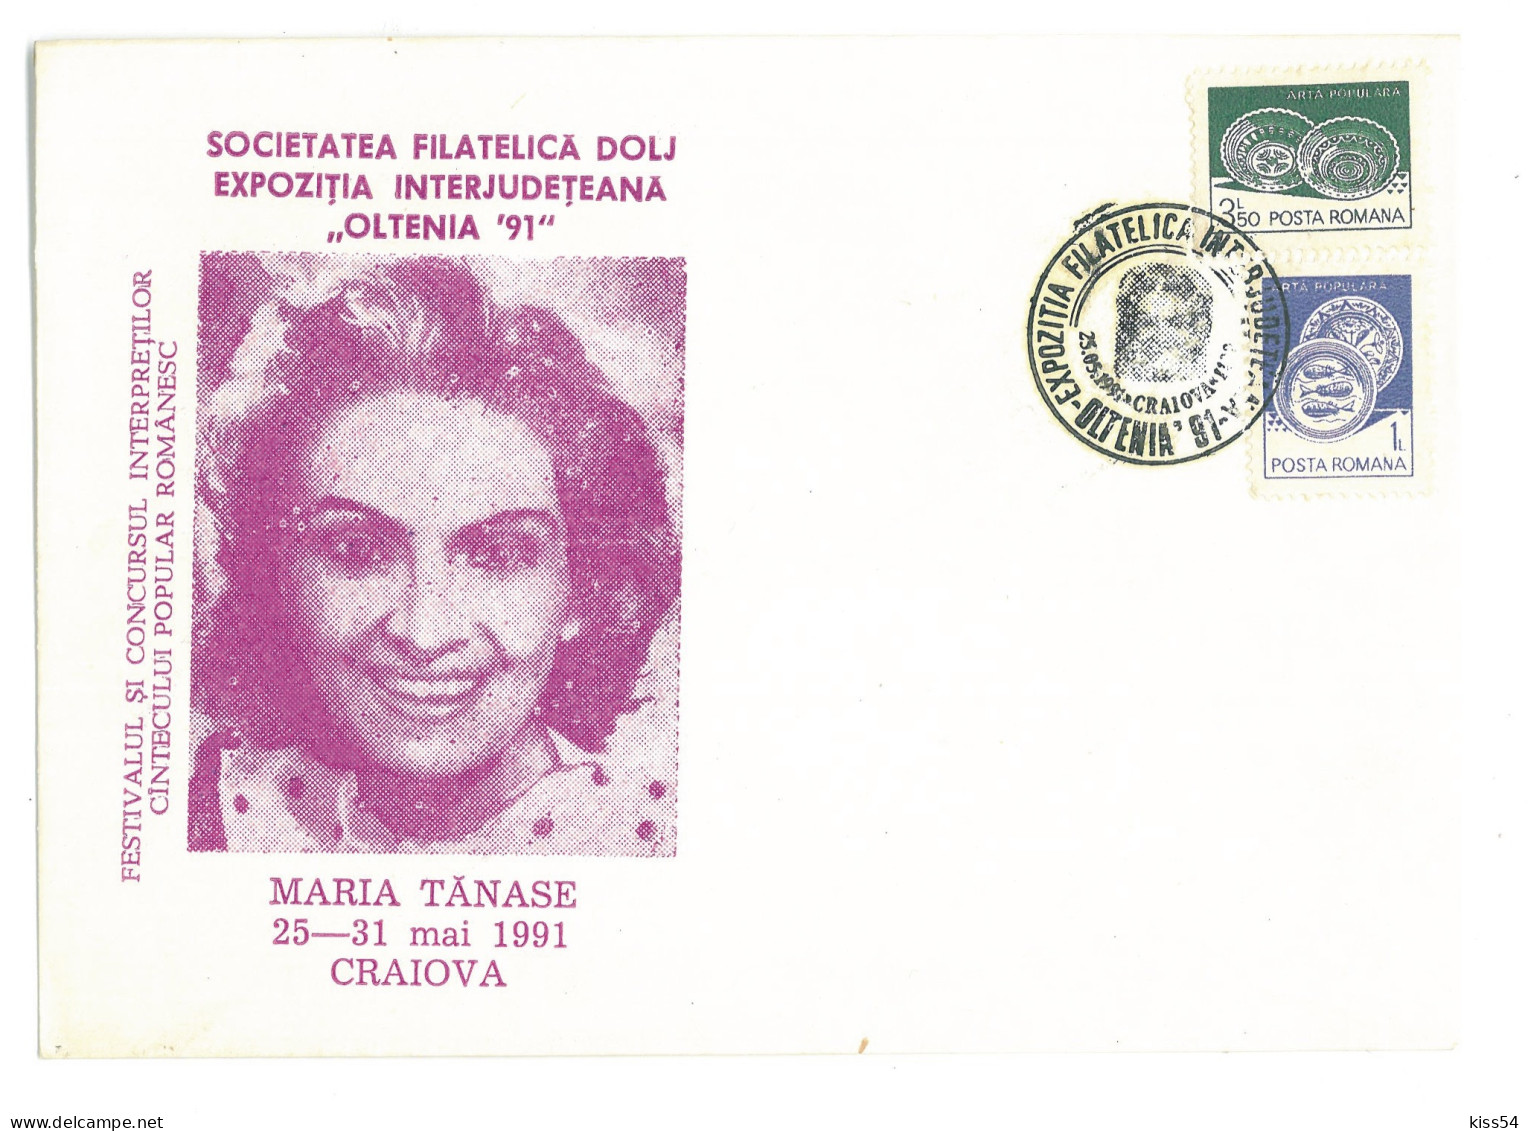 COV 88 - 3027 MARIA TANASE, The Popular Song, Romania - Cover - Used - 1991 - Storia Postale